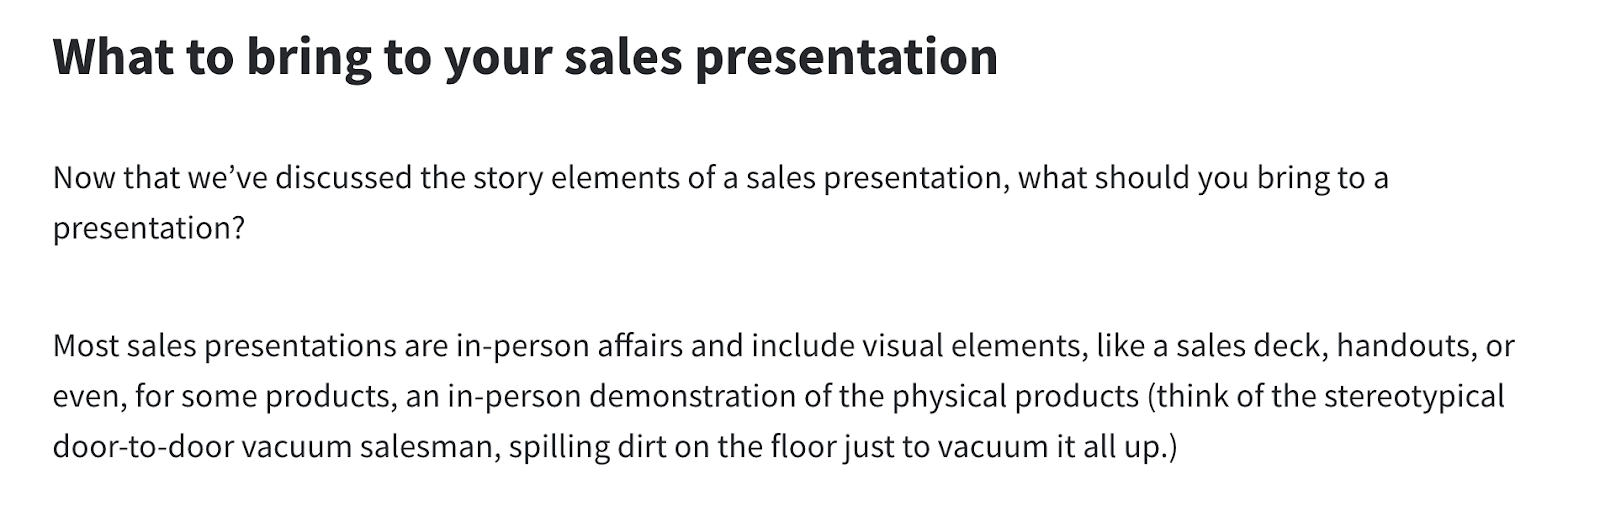 sales presentation blog post